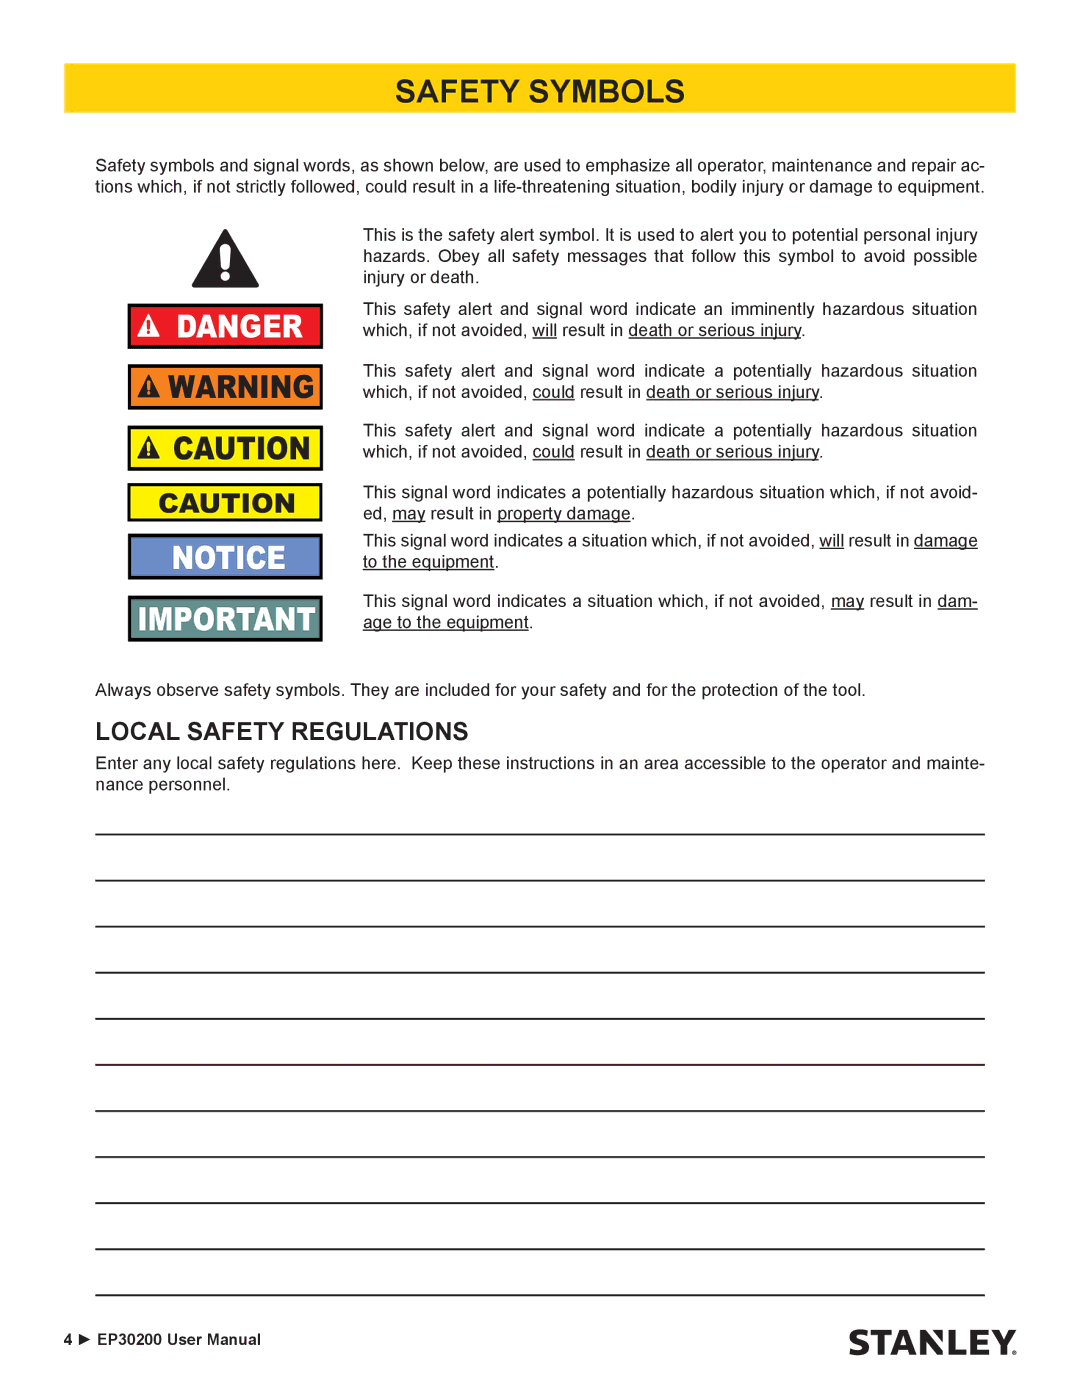 Stanley Black & Decker EP30200 user manual Safety Symbols, Local Safety Regulations 